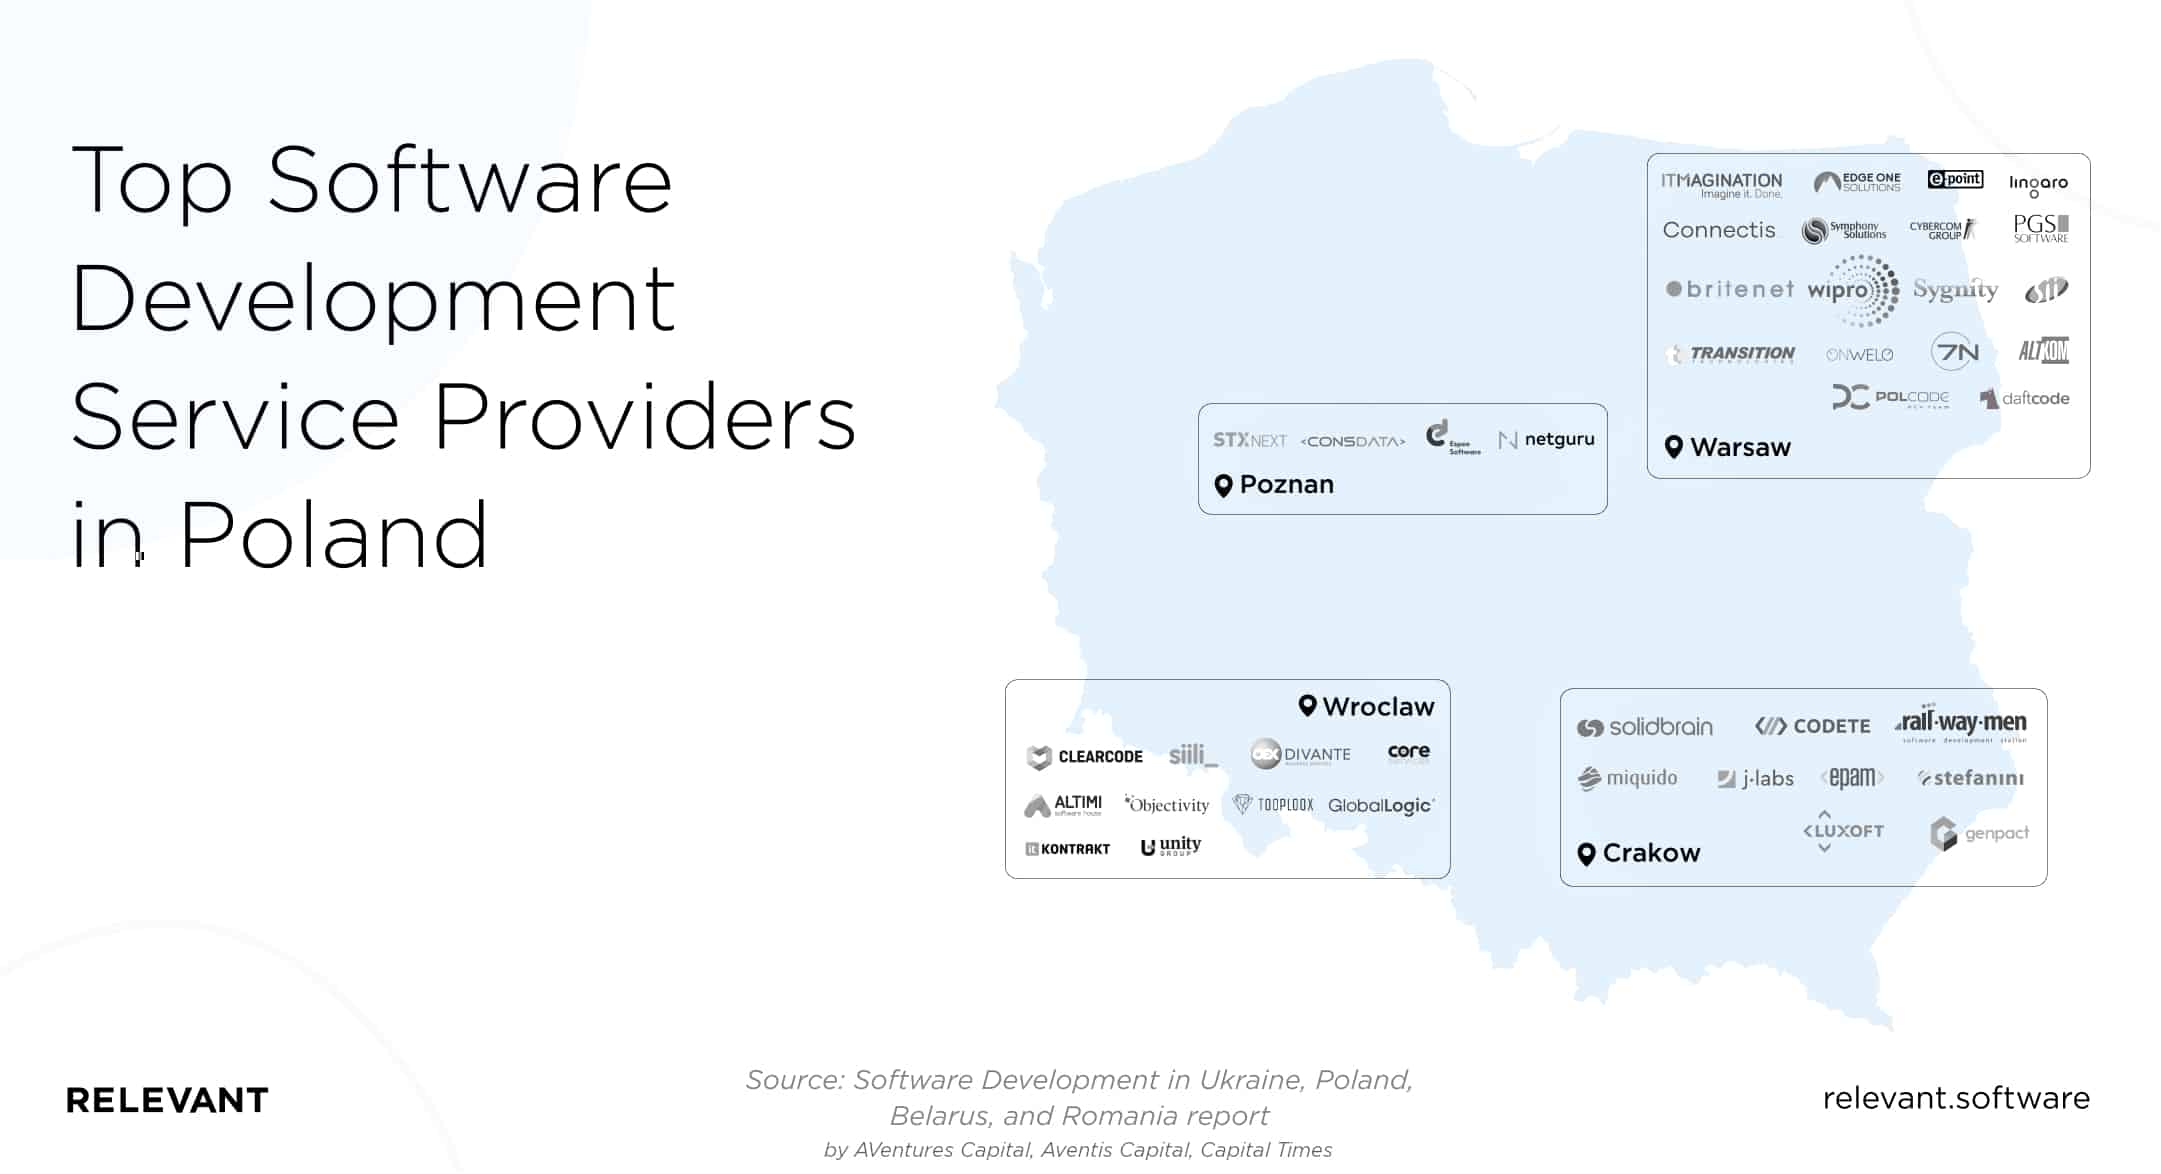 Top Software Development Service Providers in Poland